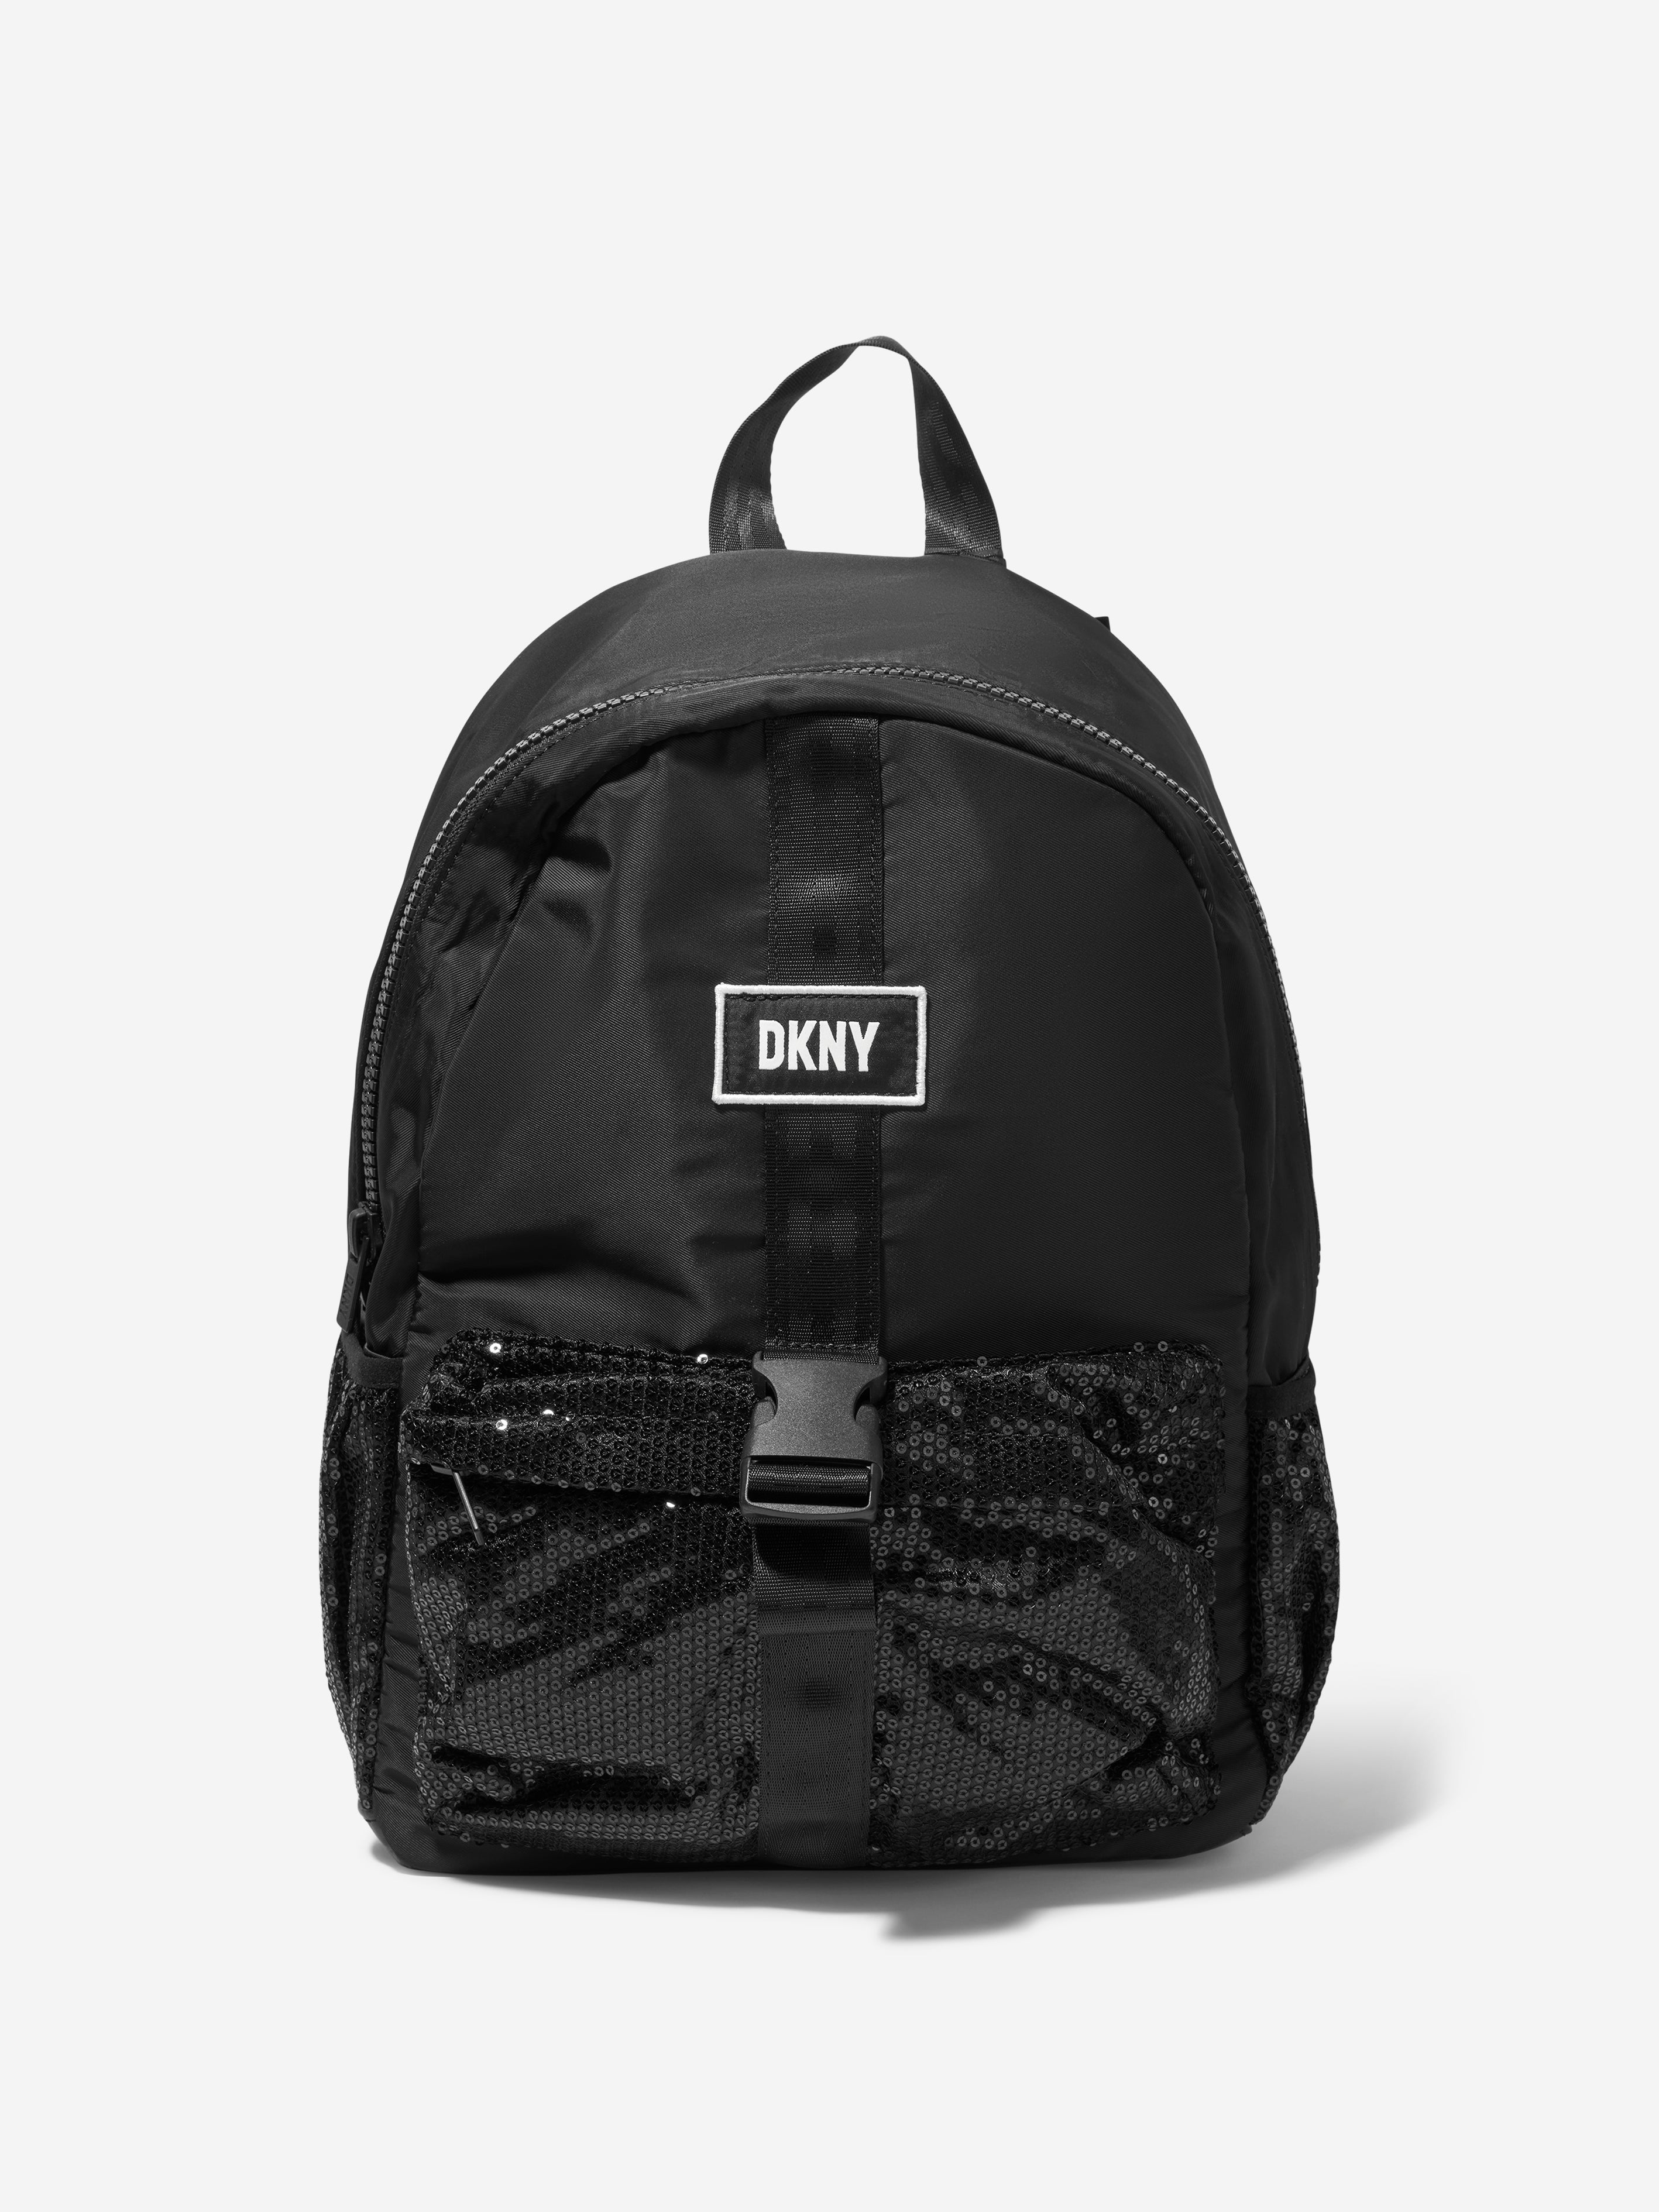 Brands shopping for less Qatar - Original DKNY bag